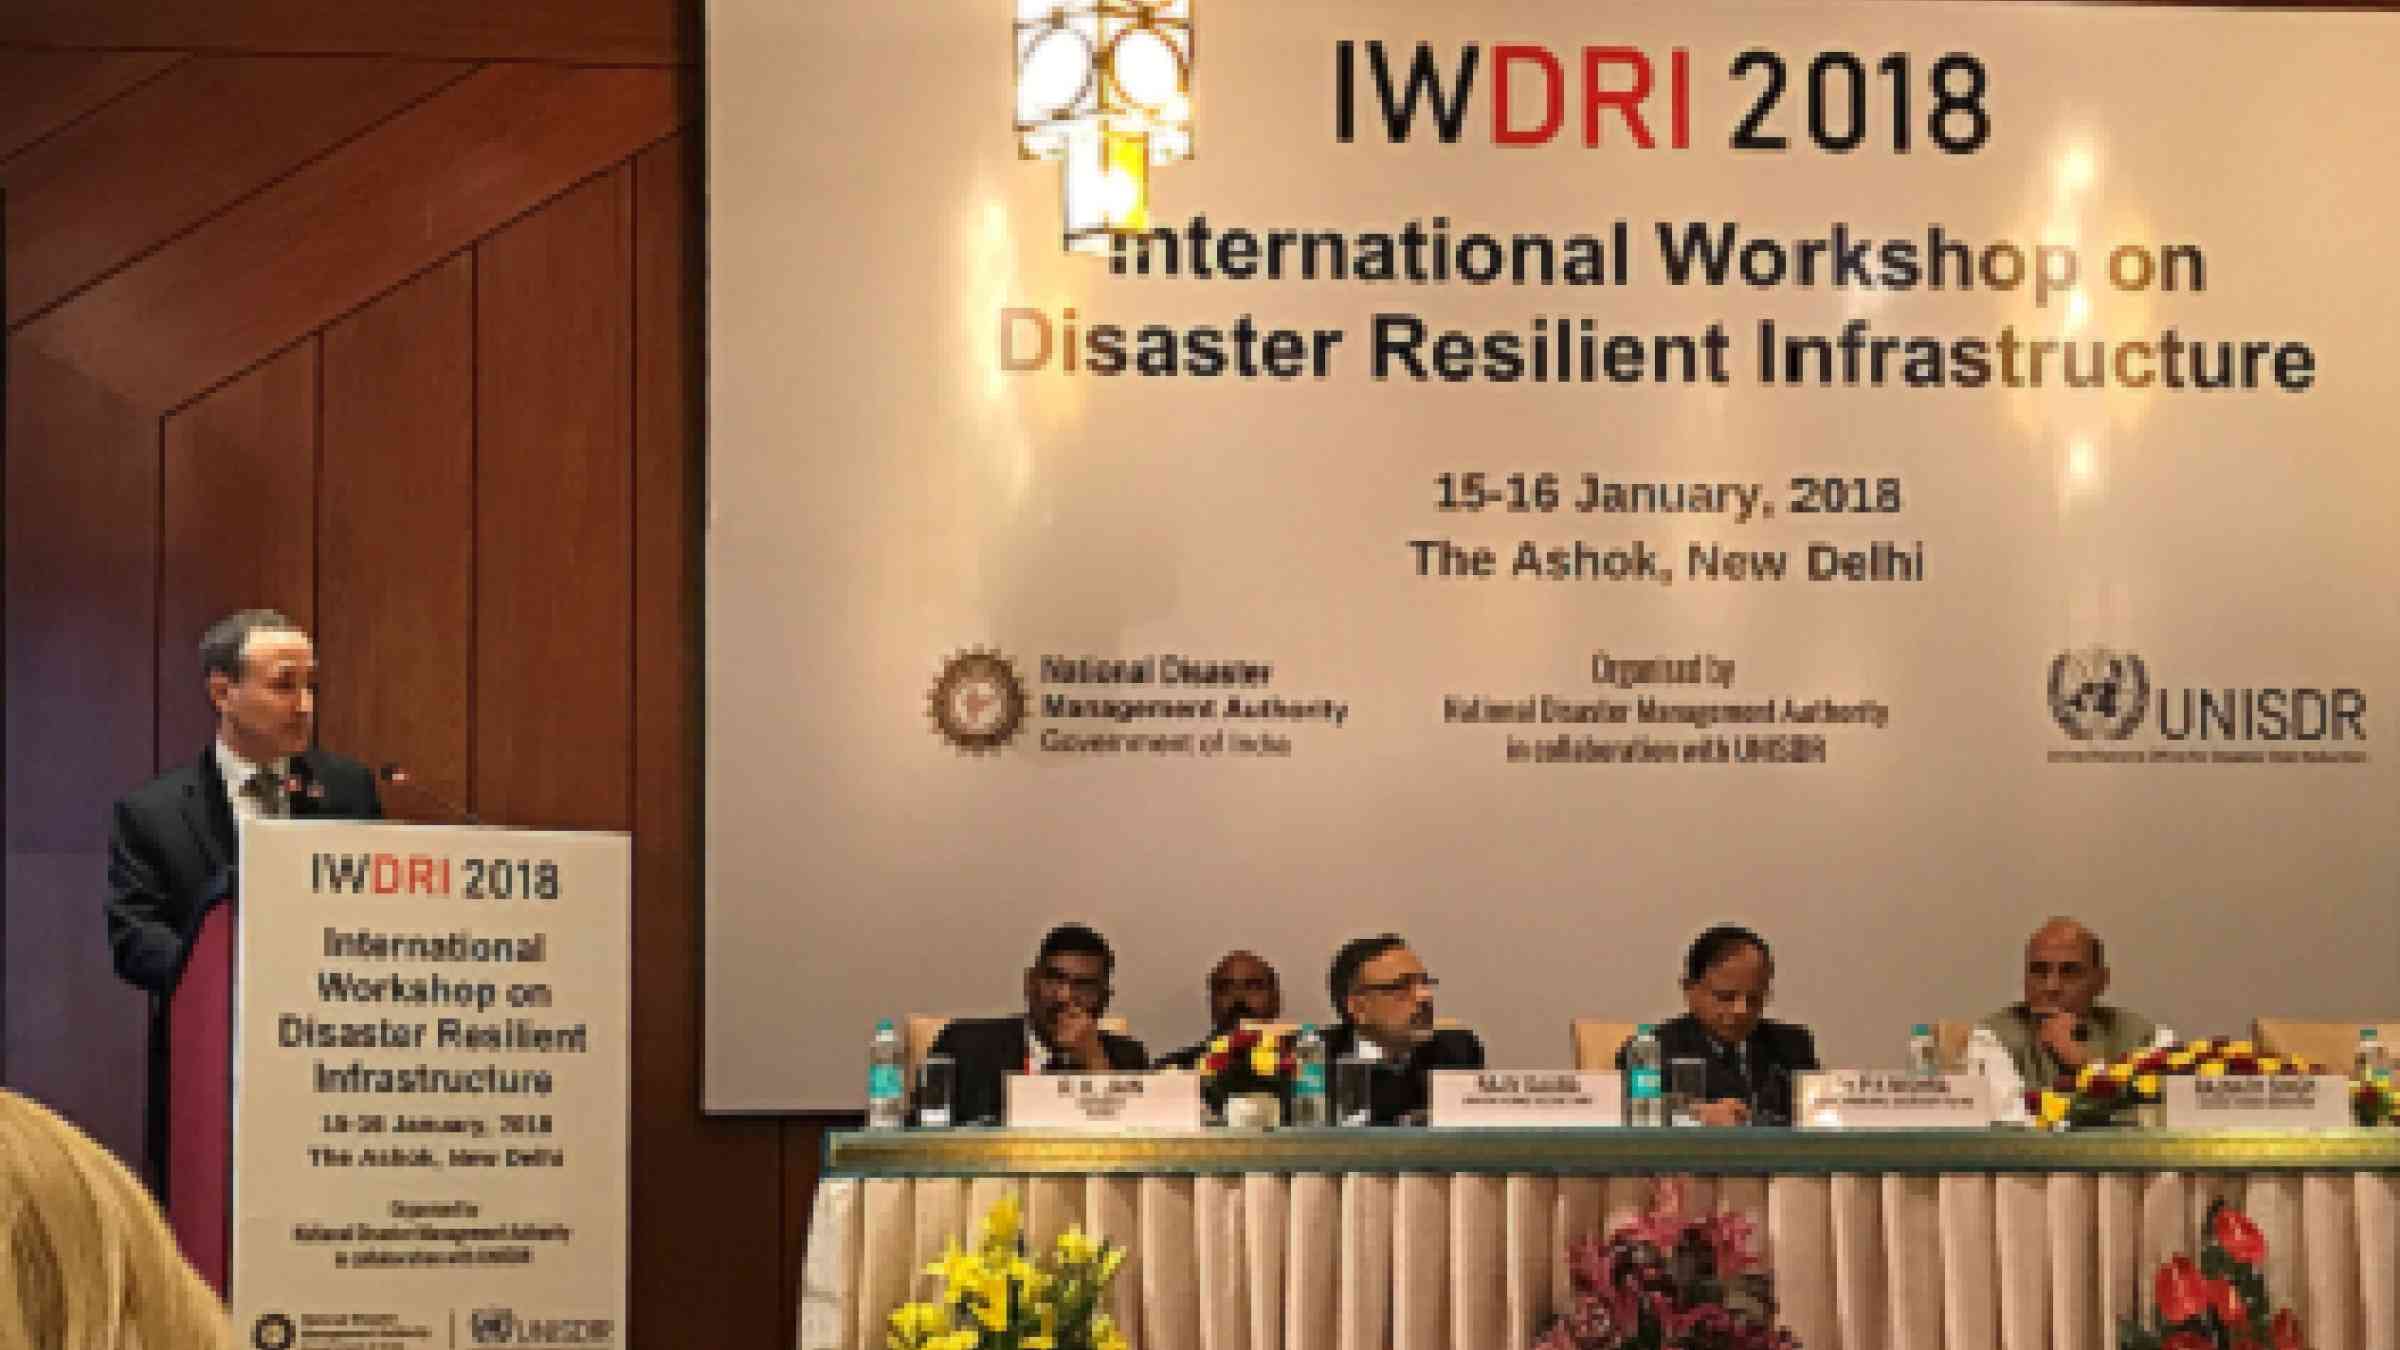 Head of UNISDR, Robert Glasser, speaking today at opening of international workshop on disaster resilient infrastructure in New Delhi. Photo UNISDR